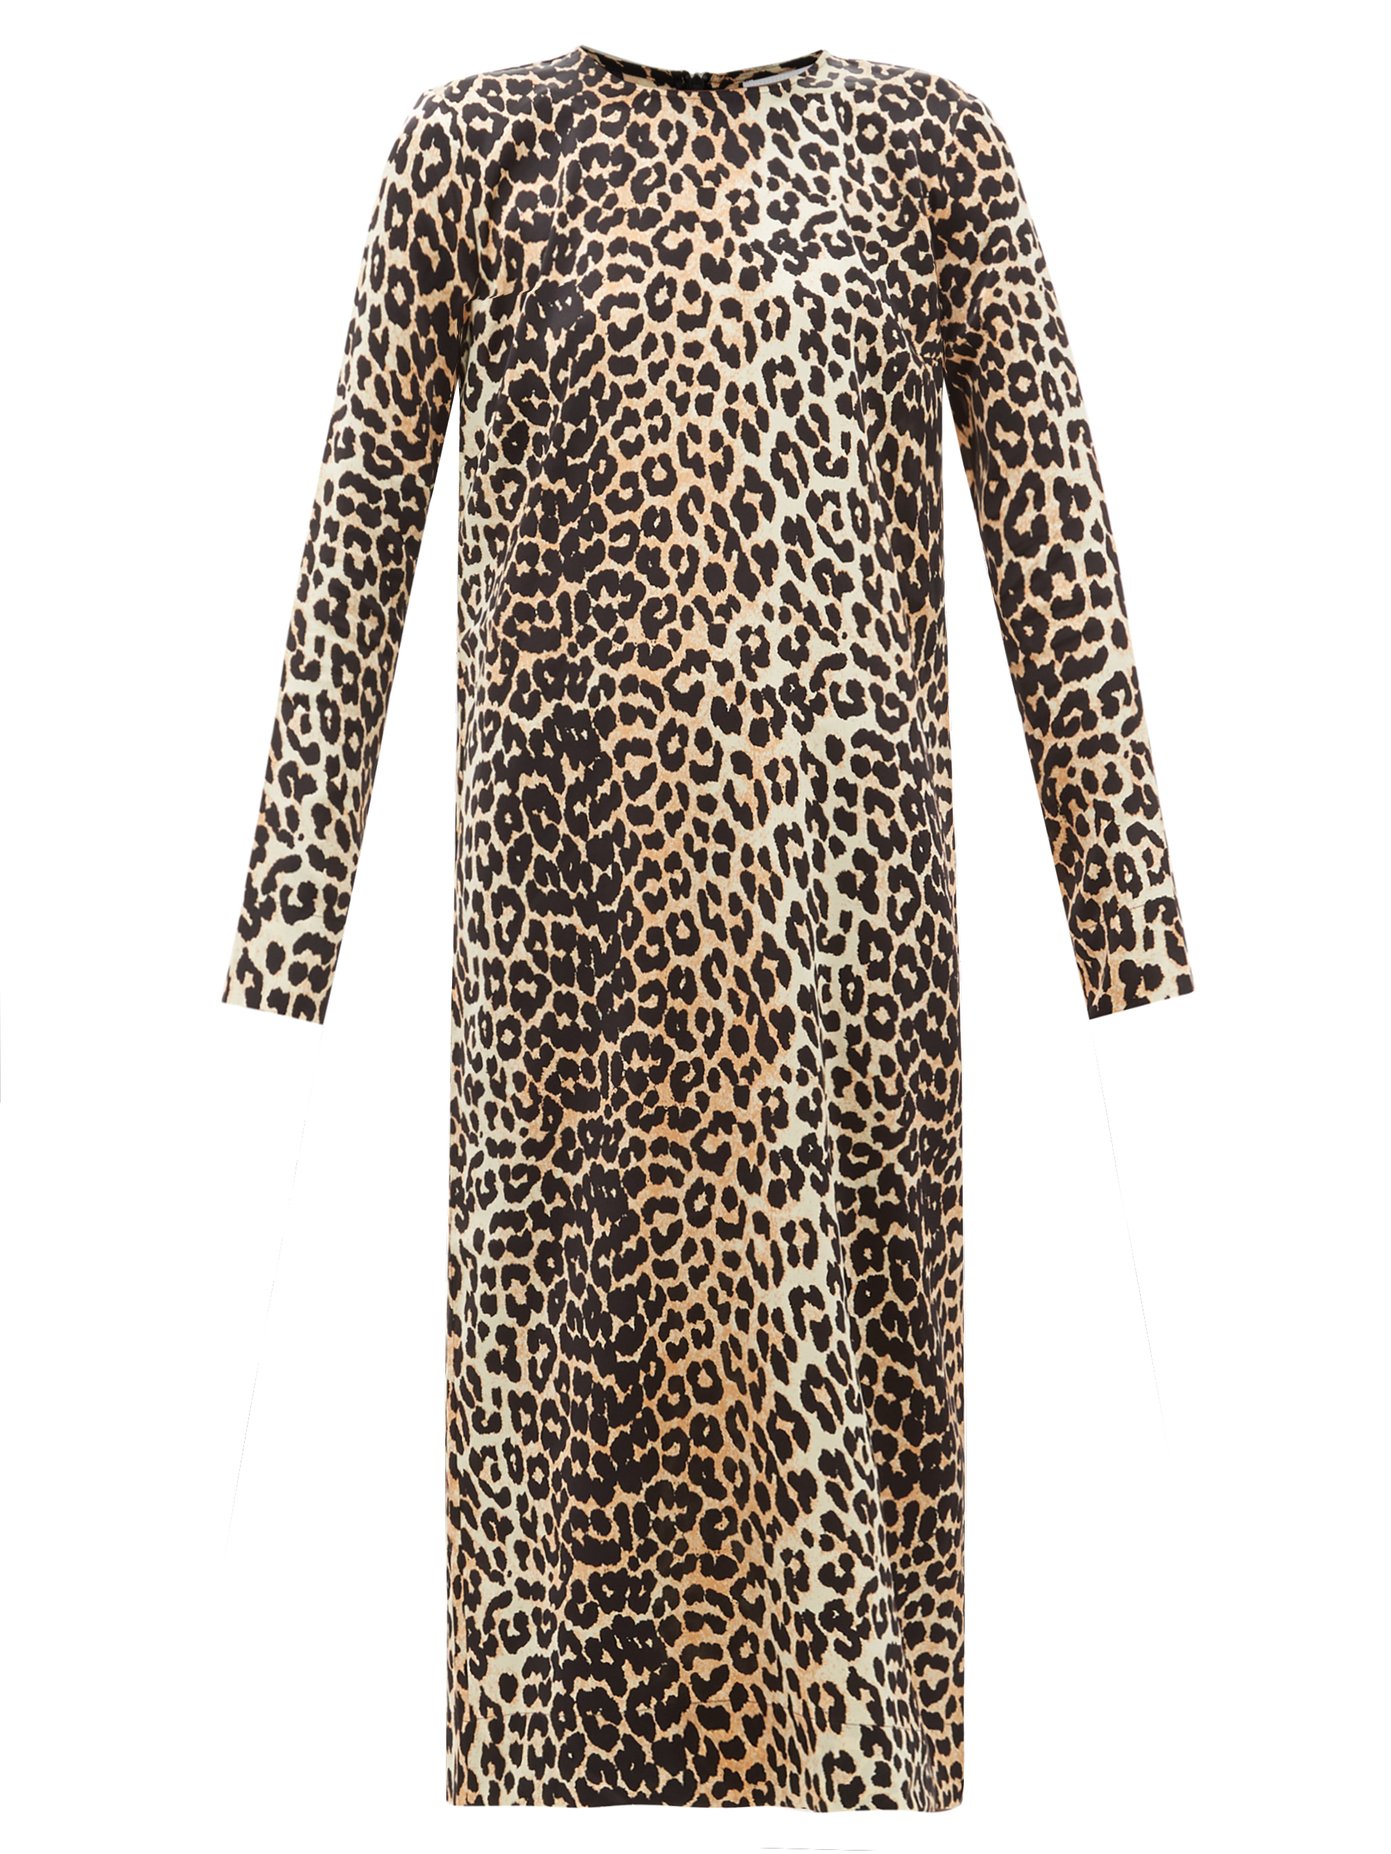 silky leopard print dress